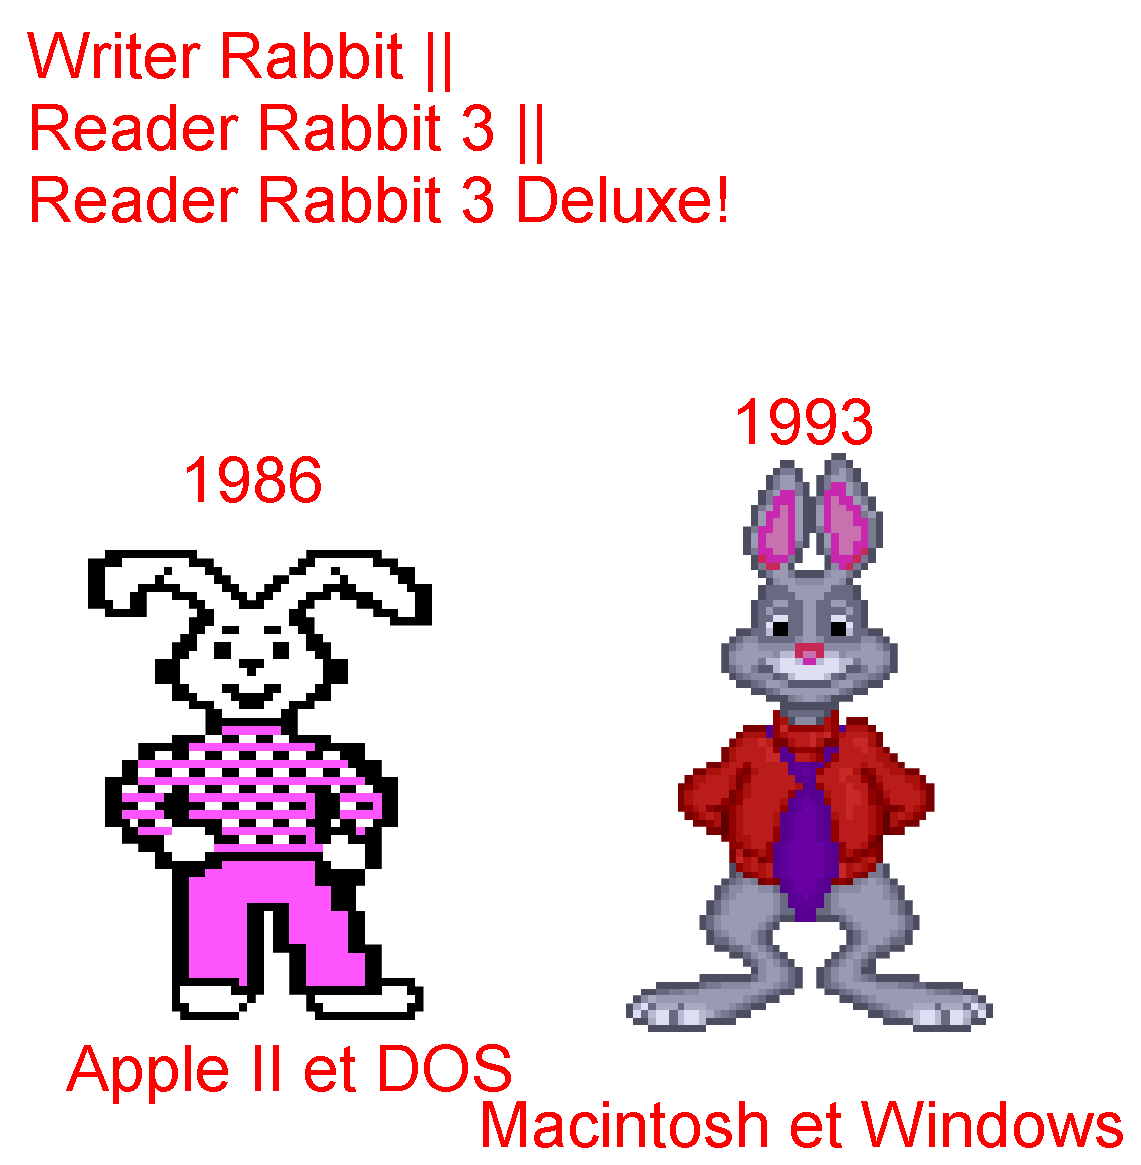 Writer Rabbit designs